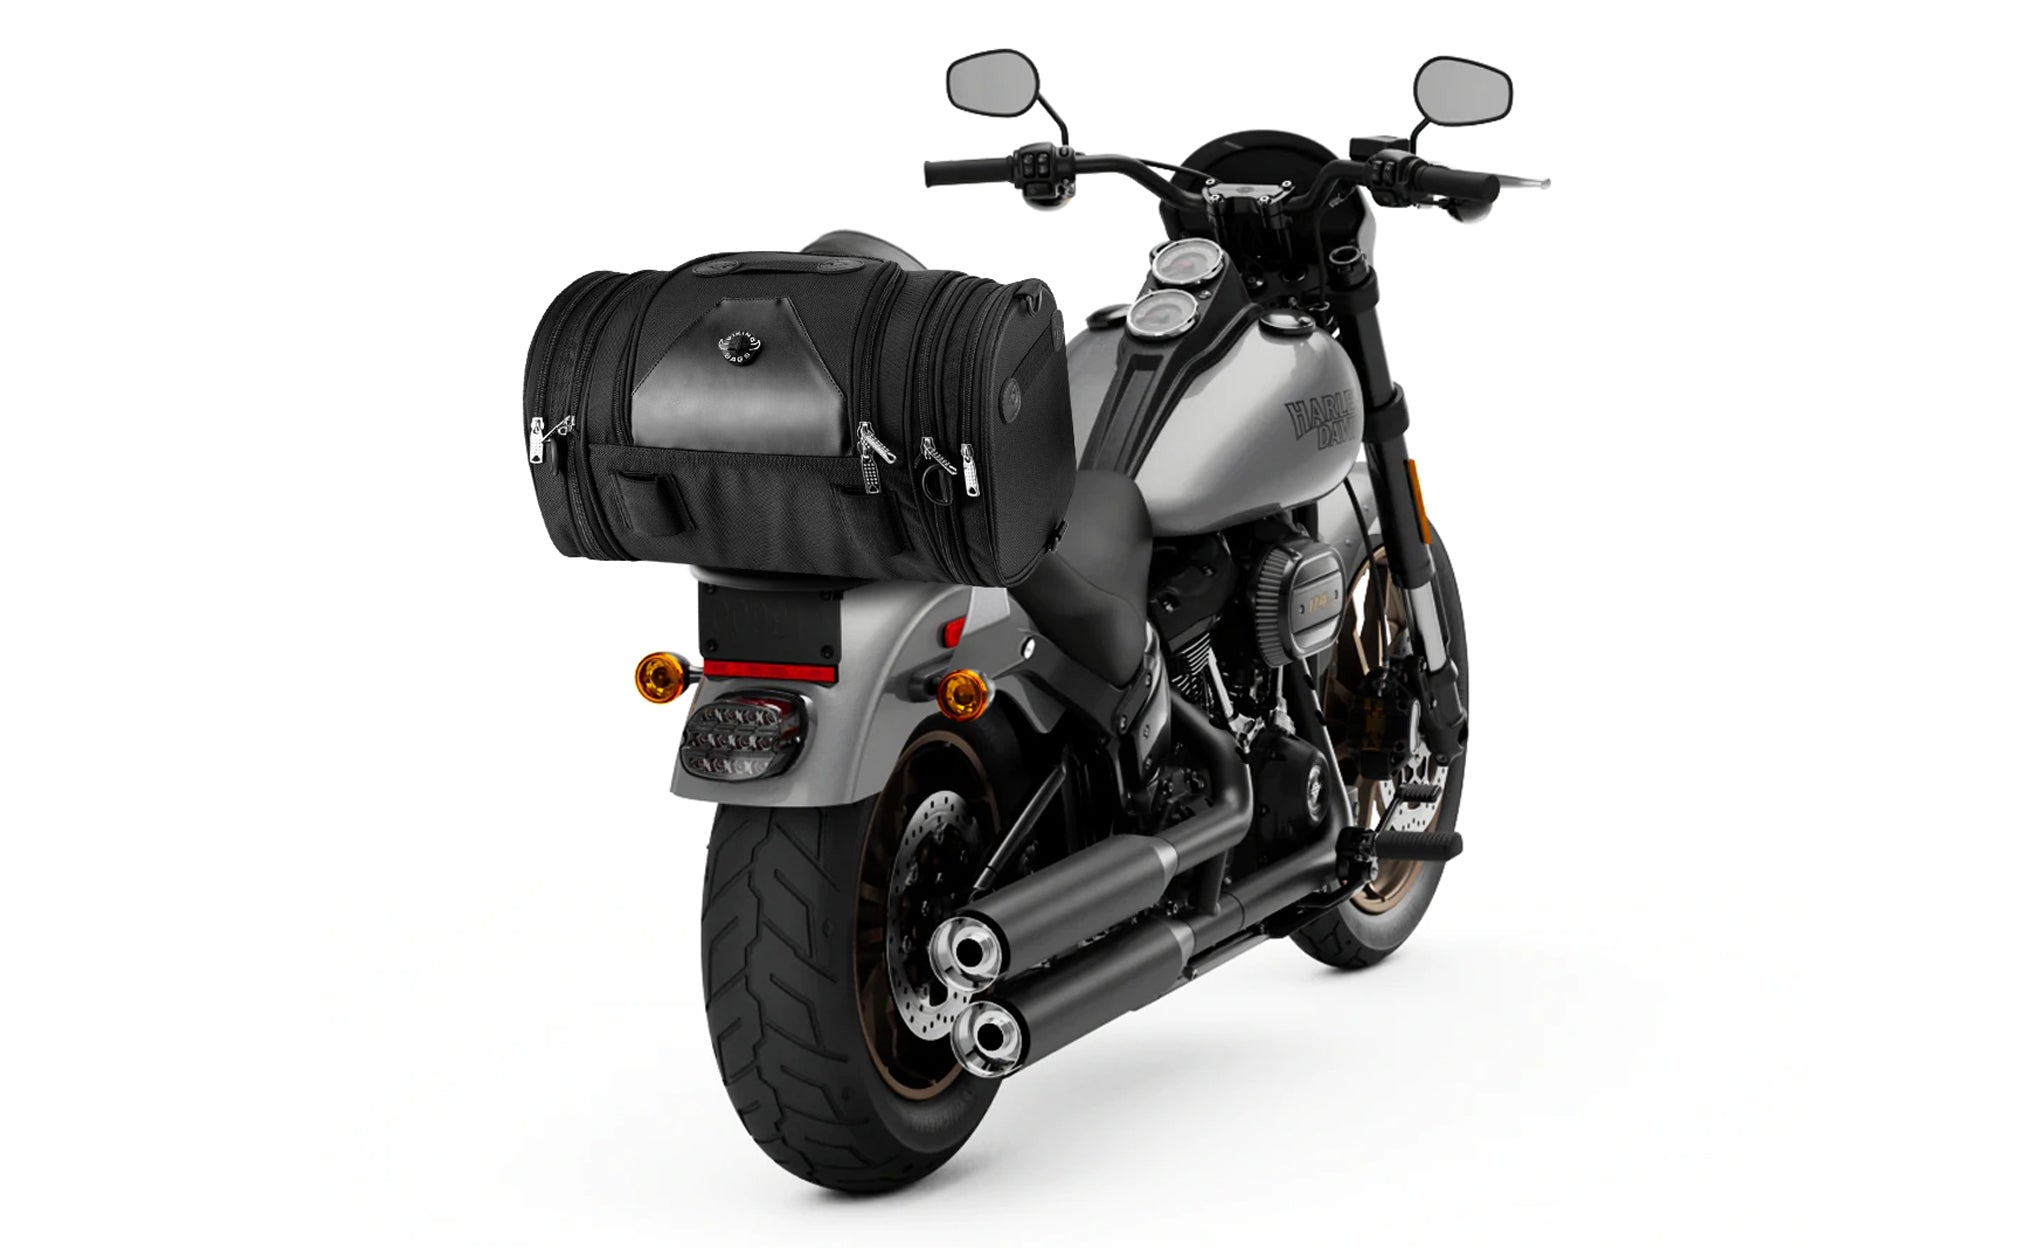 Viking Axwell Small Motorcycle Sissy Bar Bag for Harley Davidson Bag on Bike View @expand